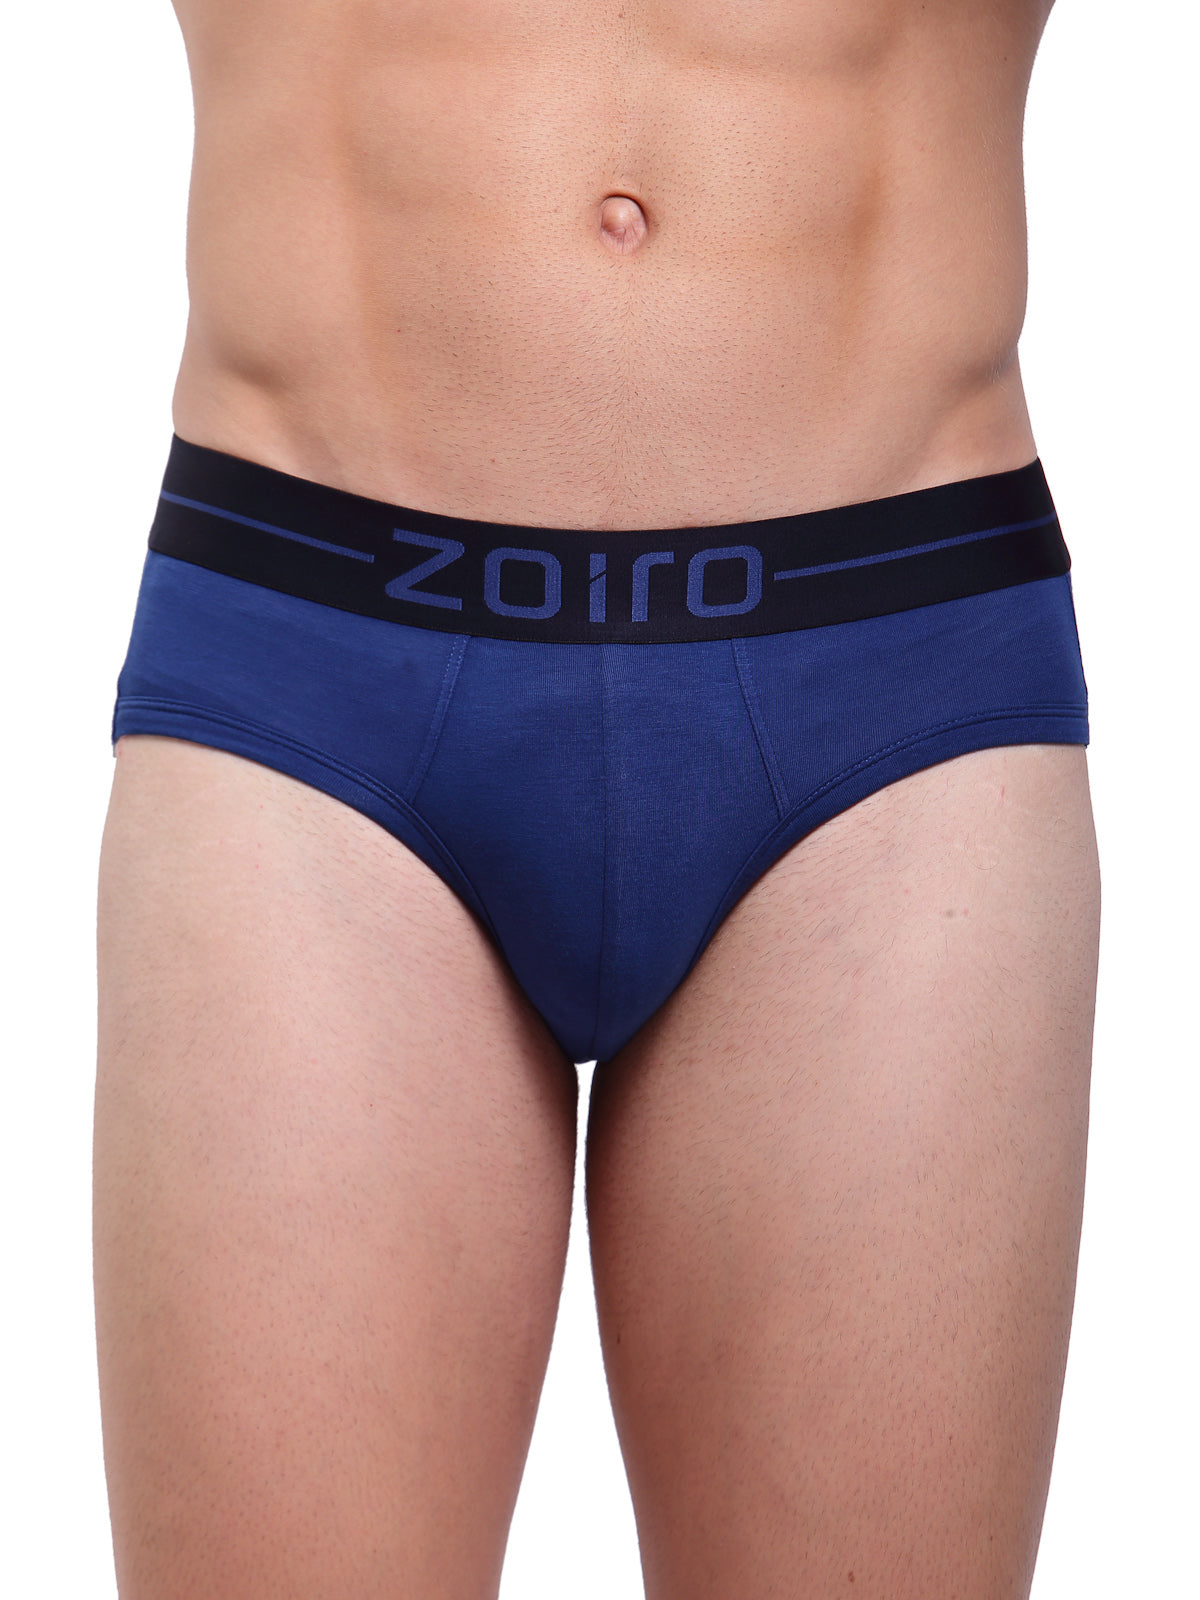 Zoiro Men&#39;s Cotton, Modal, Spandex Softs Brief Federal Blue